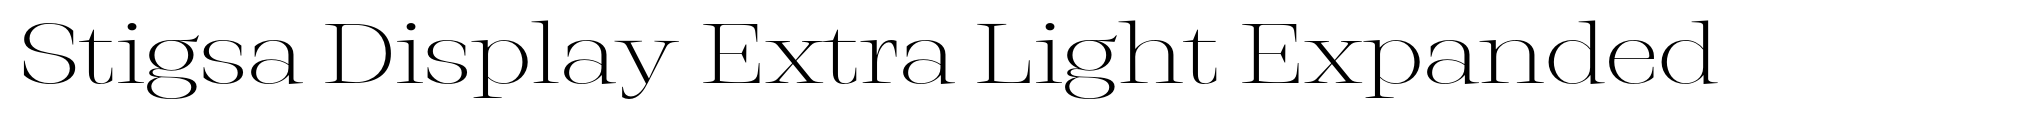 Stigsa Display Extra Light Expanded image